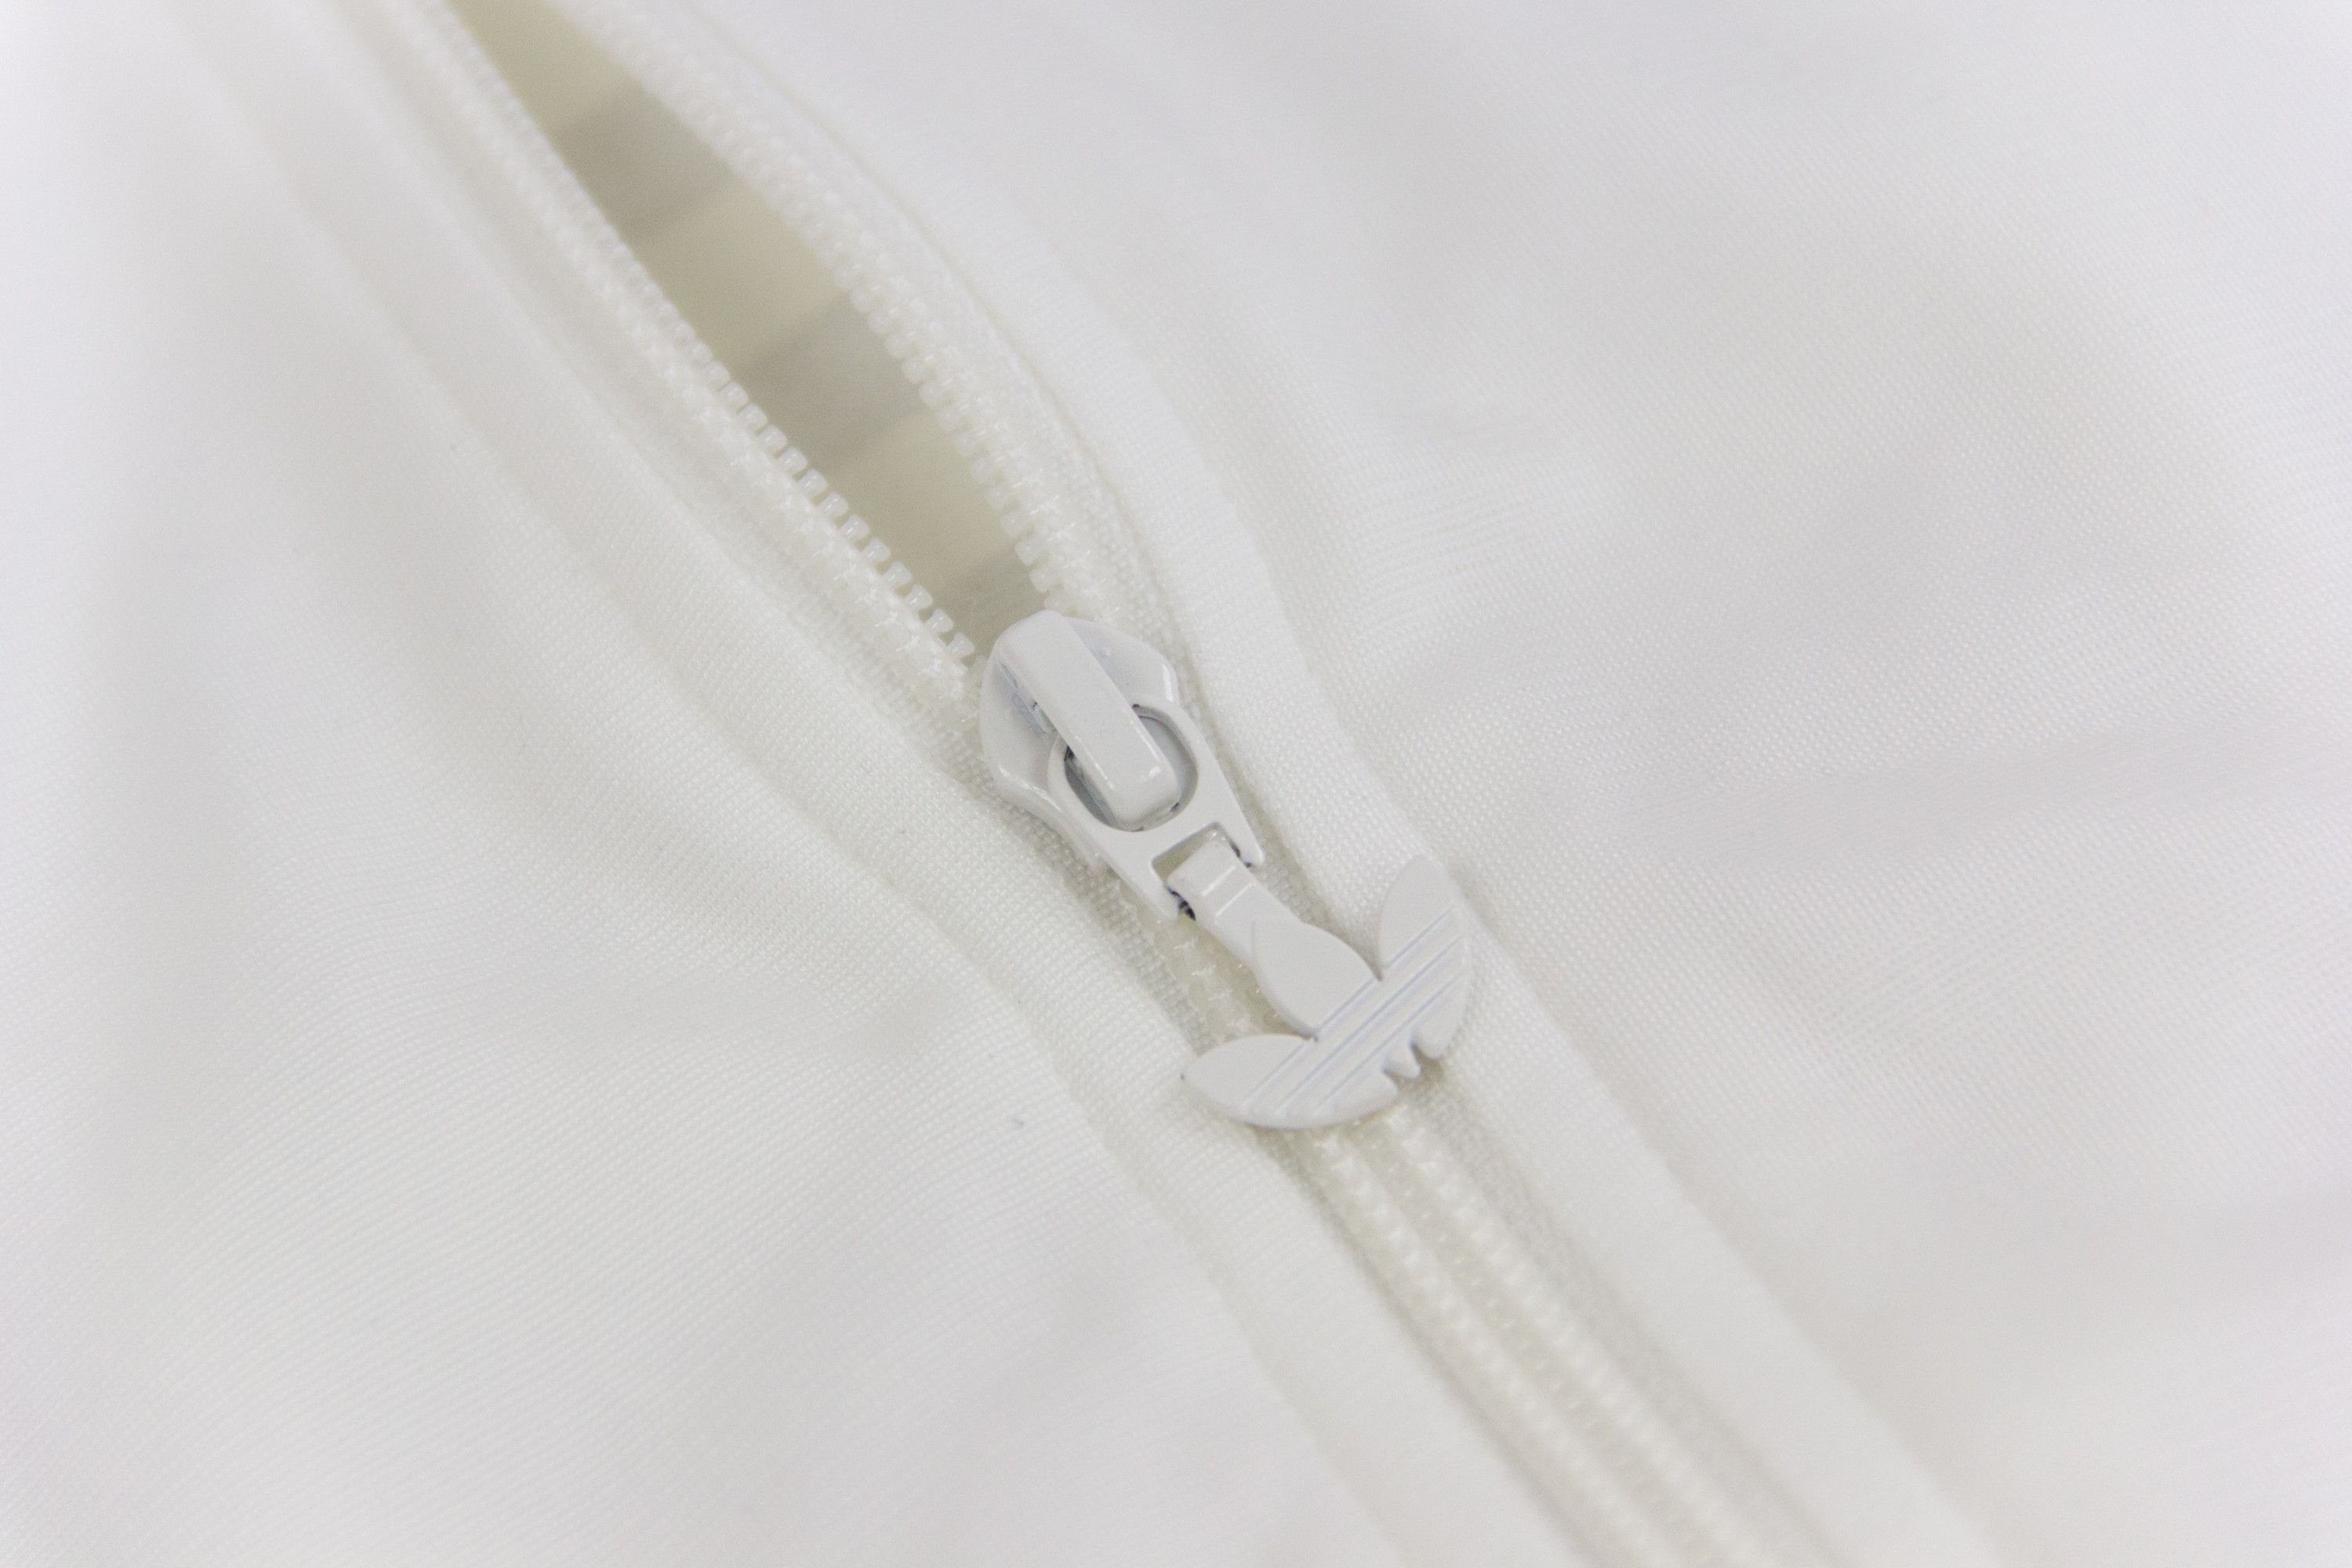 Adidas Adidas Originals White Track Jacket with Silver Stripes, Size M Size US M / EU 48-50 / 2 - 3 Thumbnail